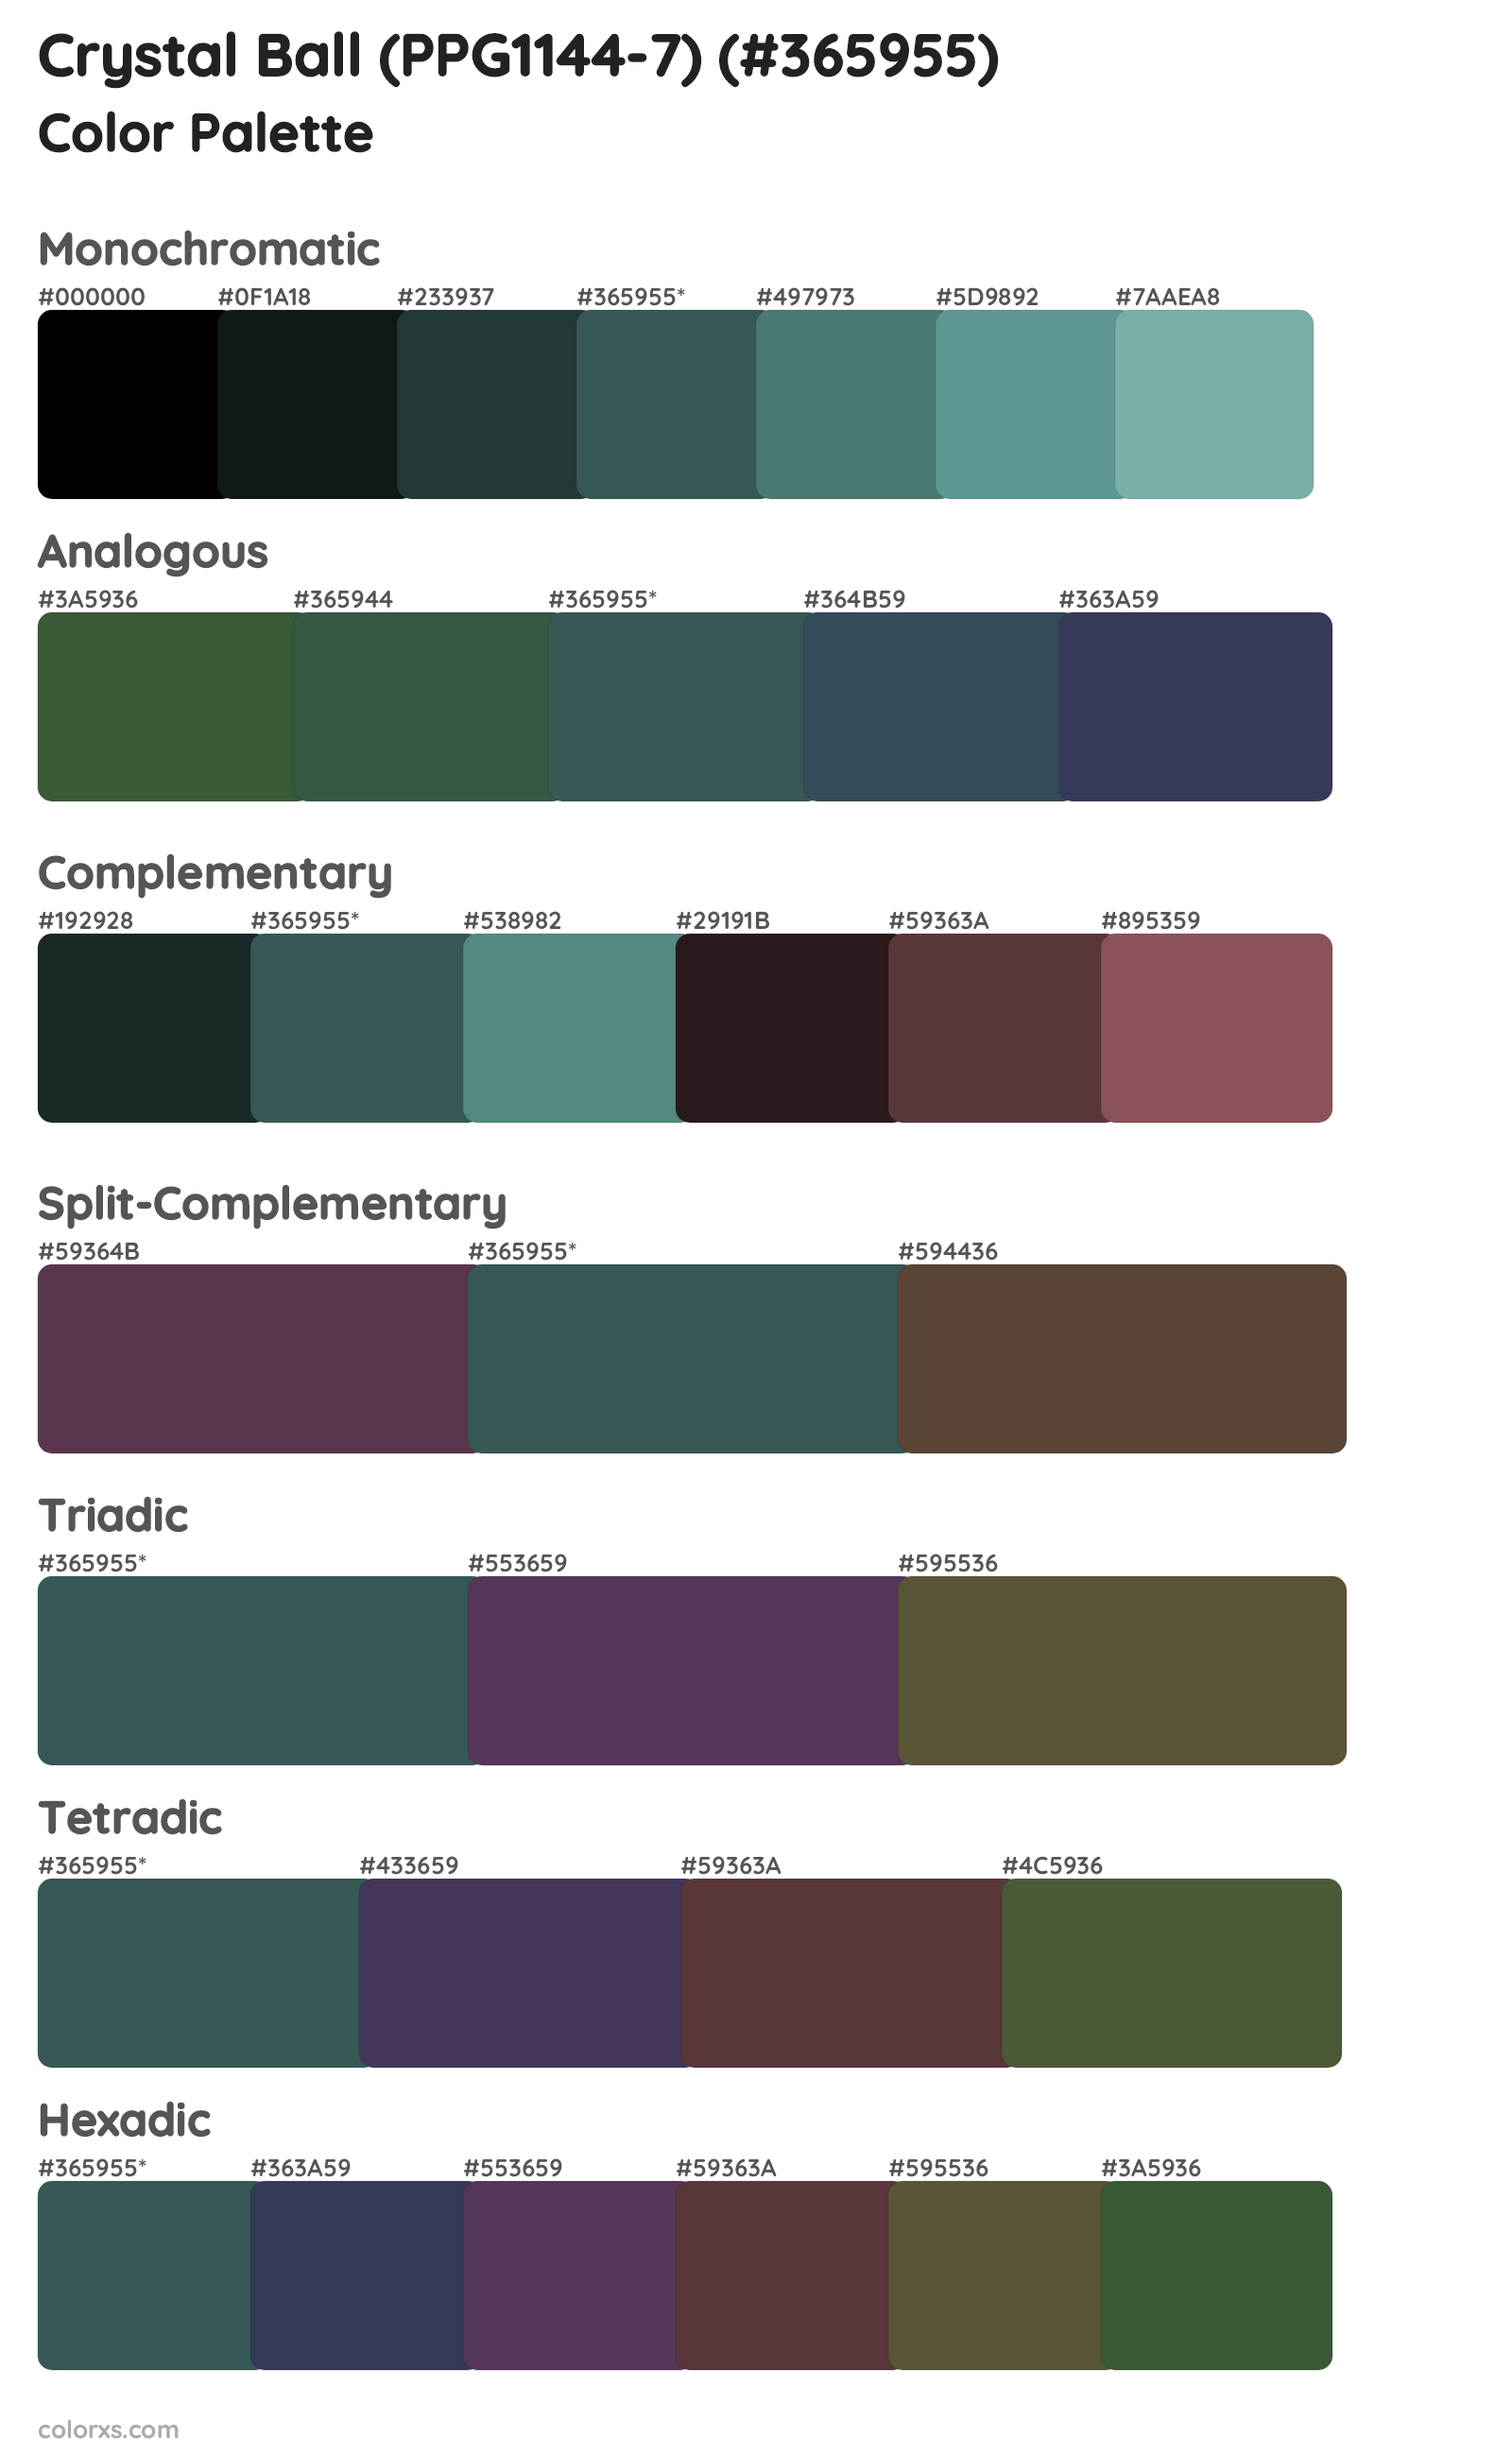 Crystal Ball (PPG1144-7) Color Scheme Palettes